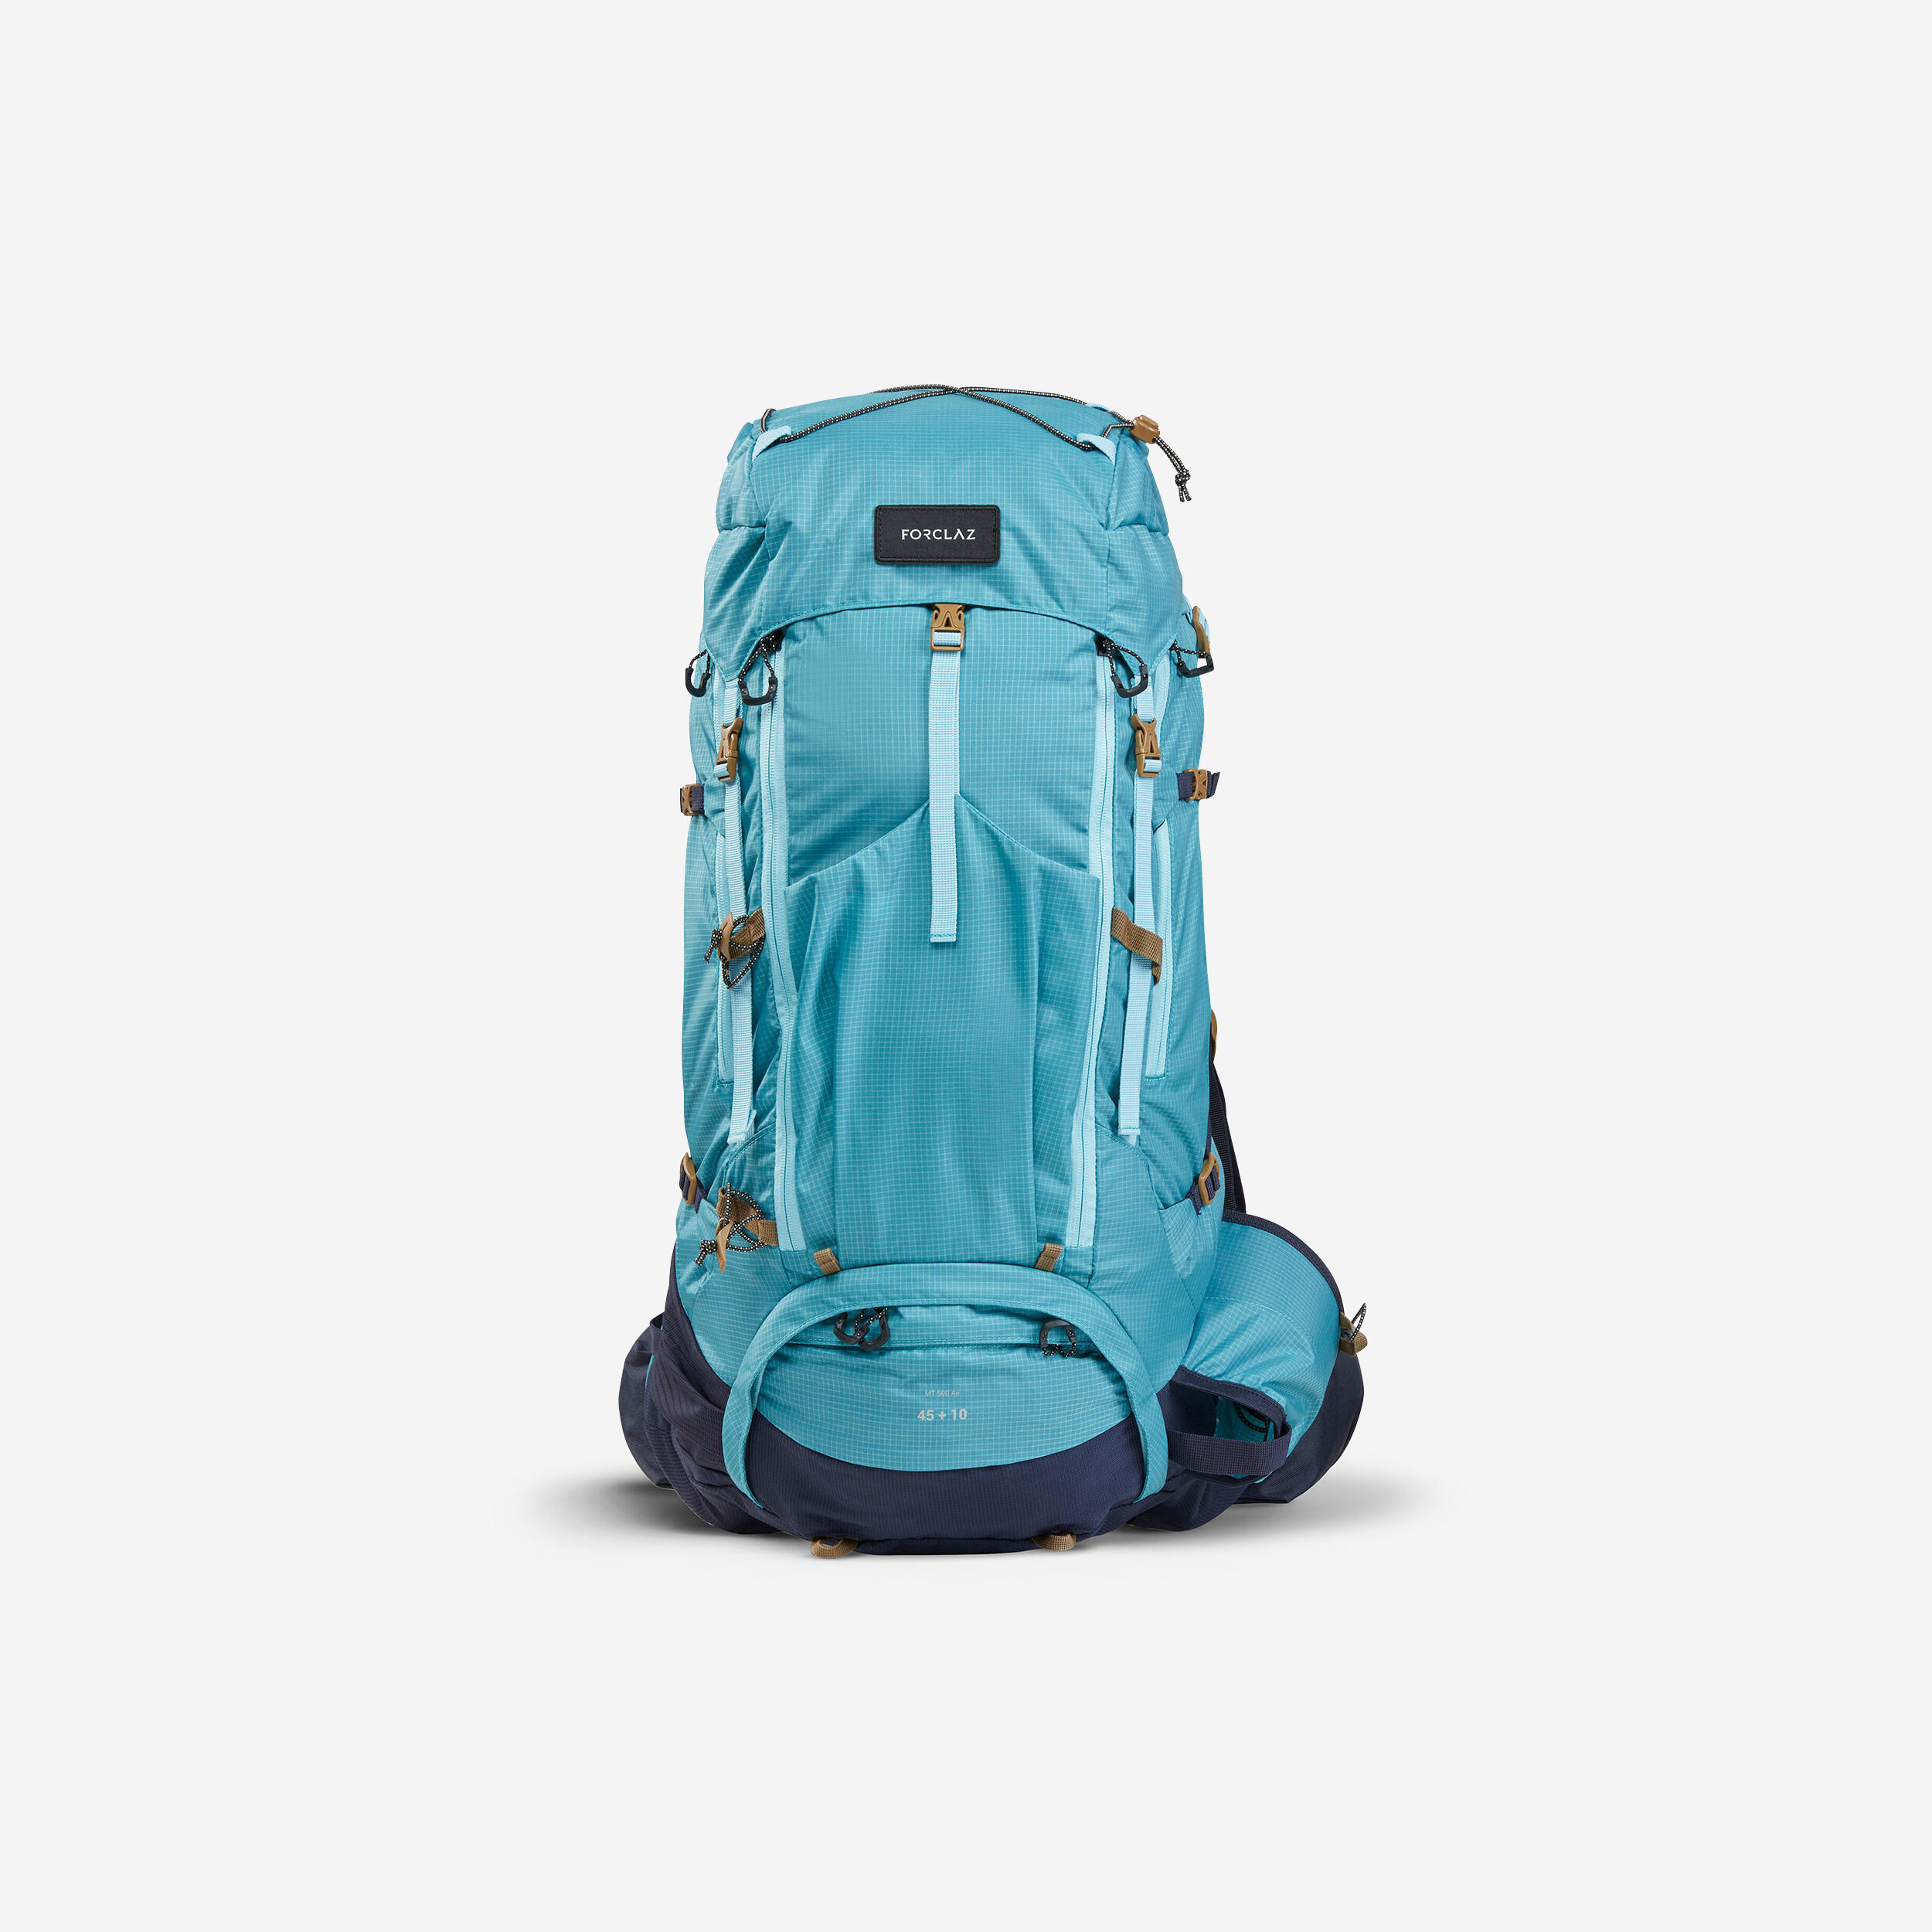 FORCLAZ Women's Trekking Backpack 45+10 L - MT500 AIR